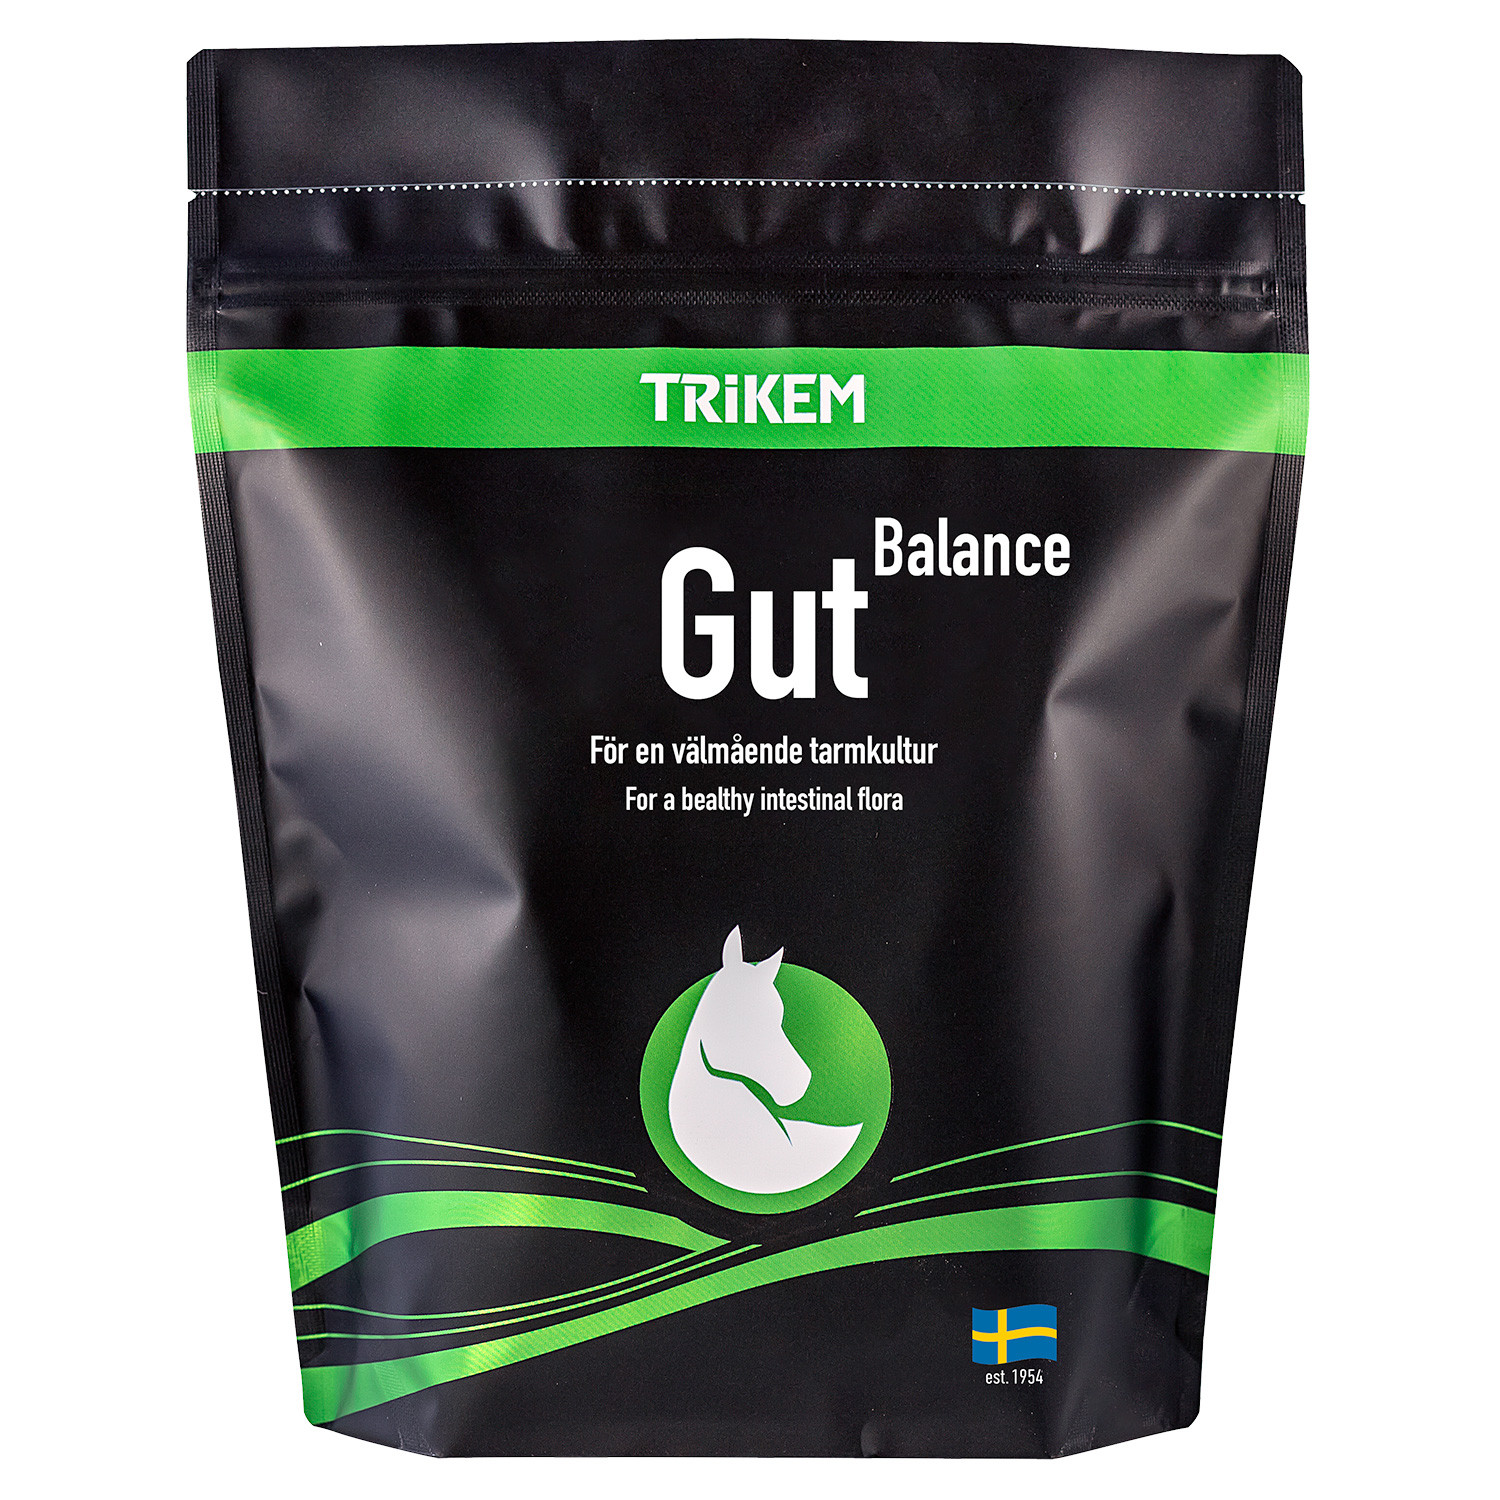 Trikem gut balance pellets, 1kg